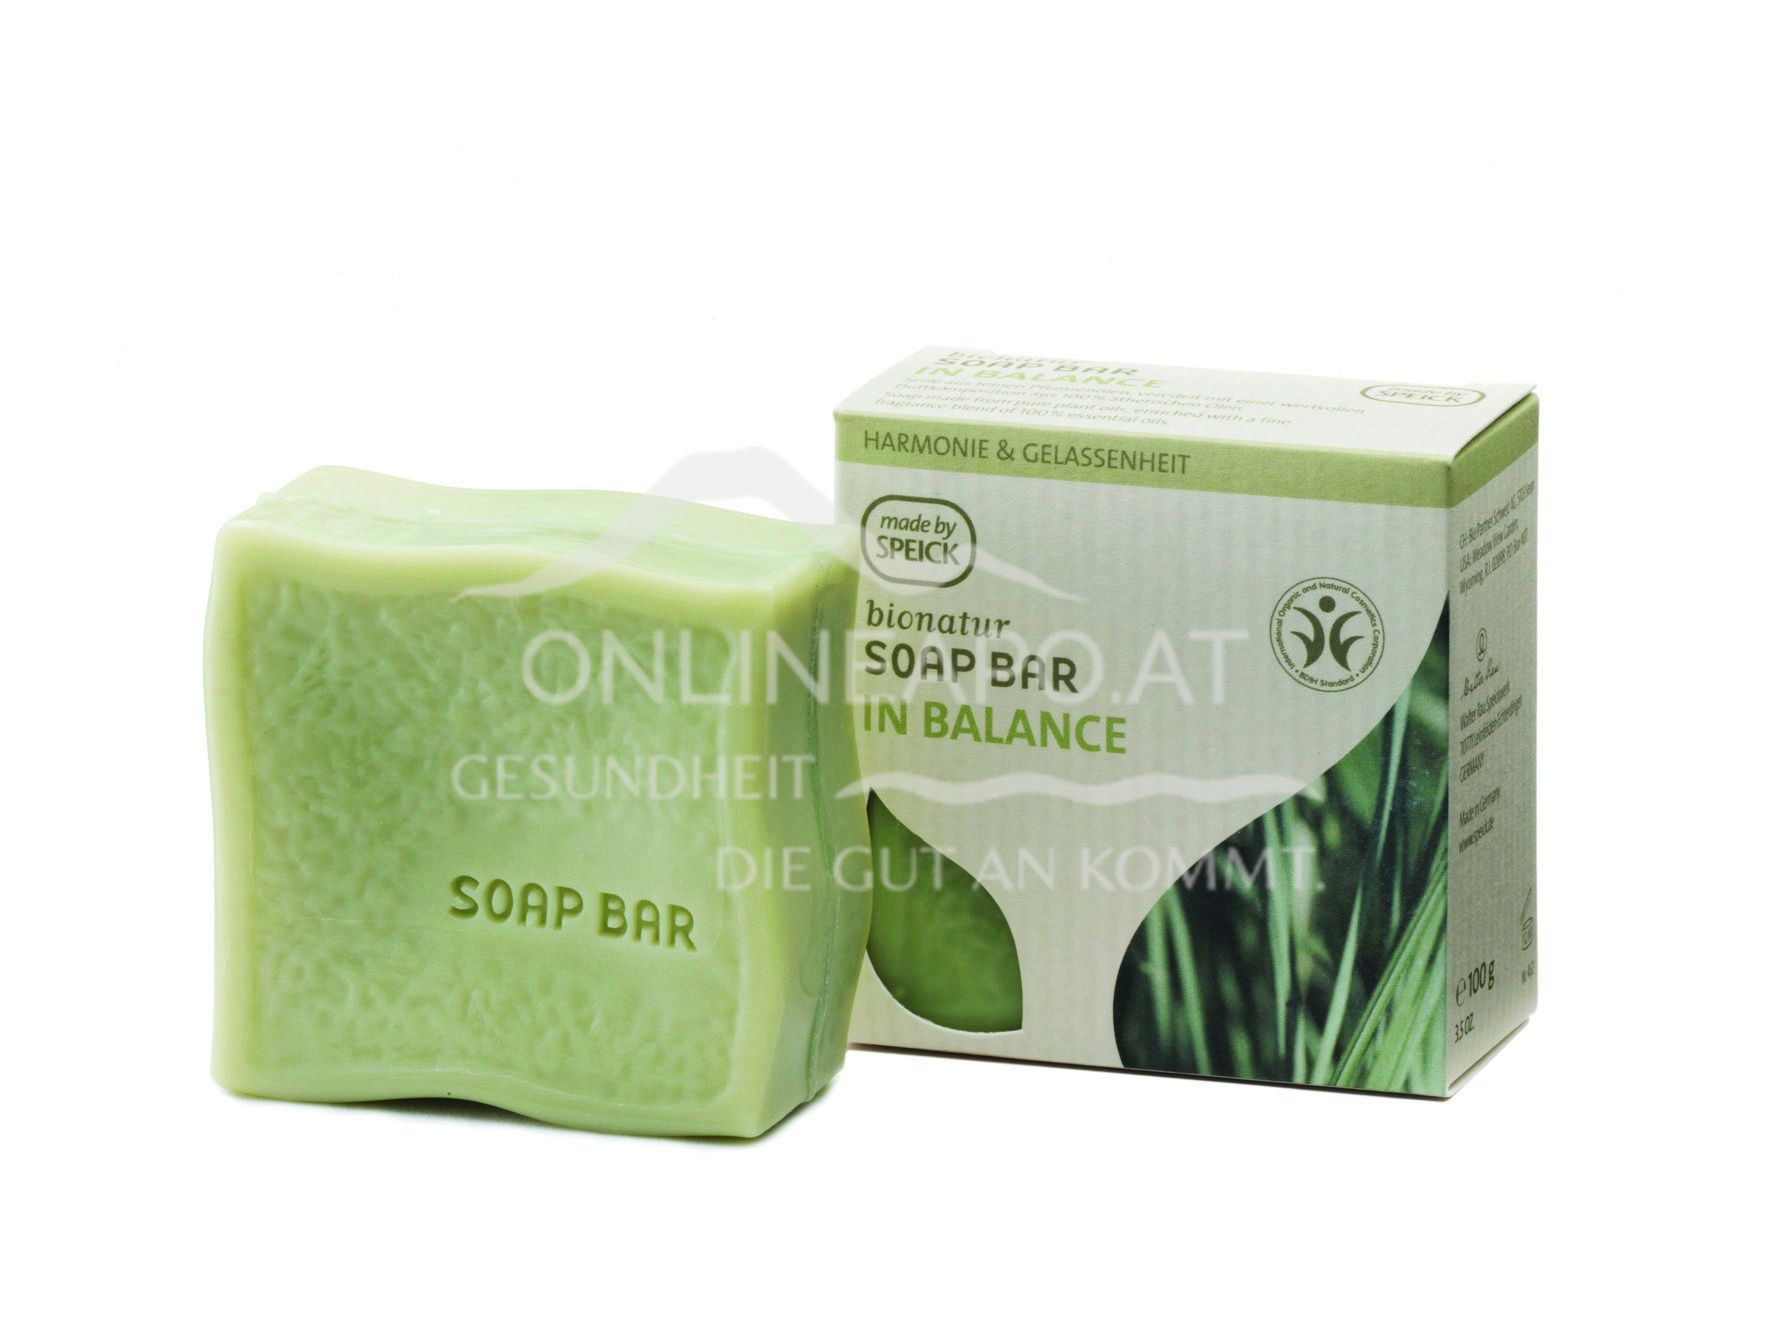 Speick Bionatur Soap Bar In Balance